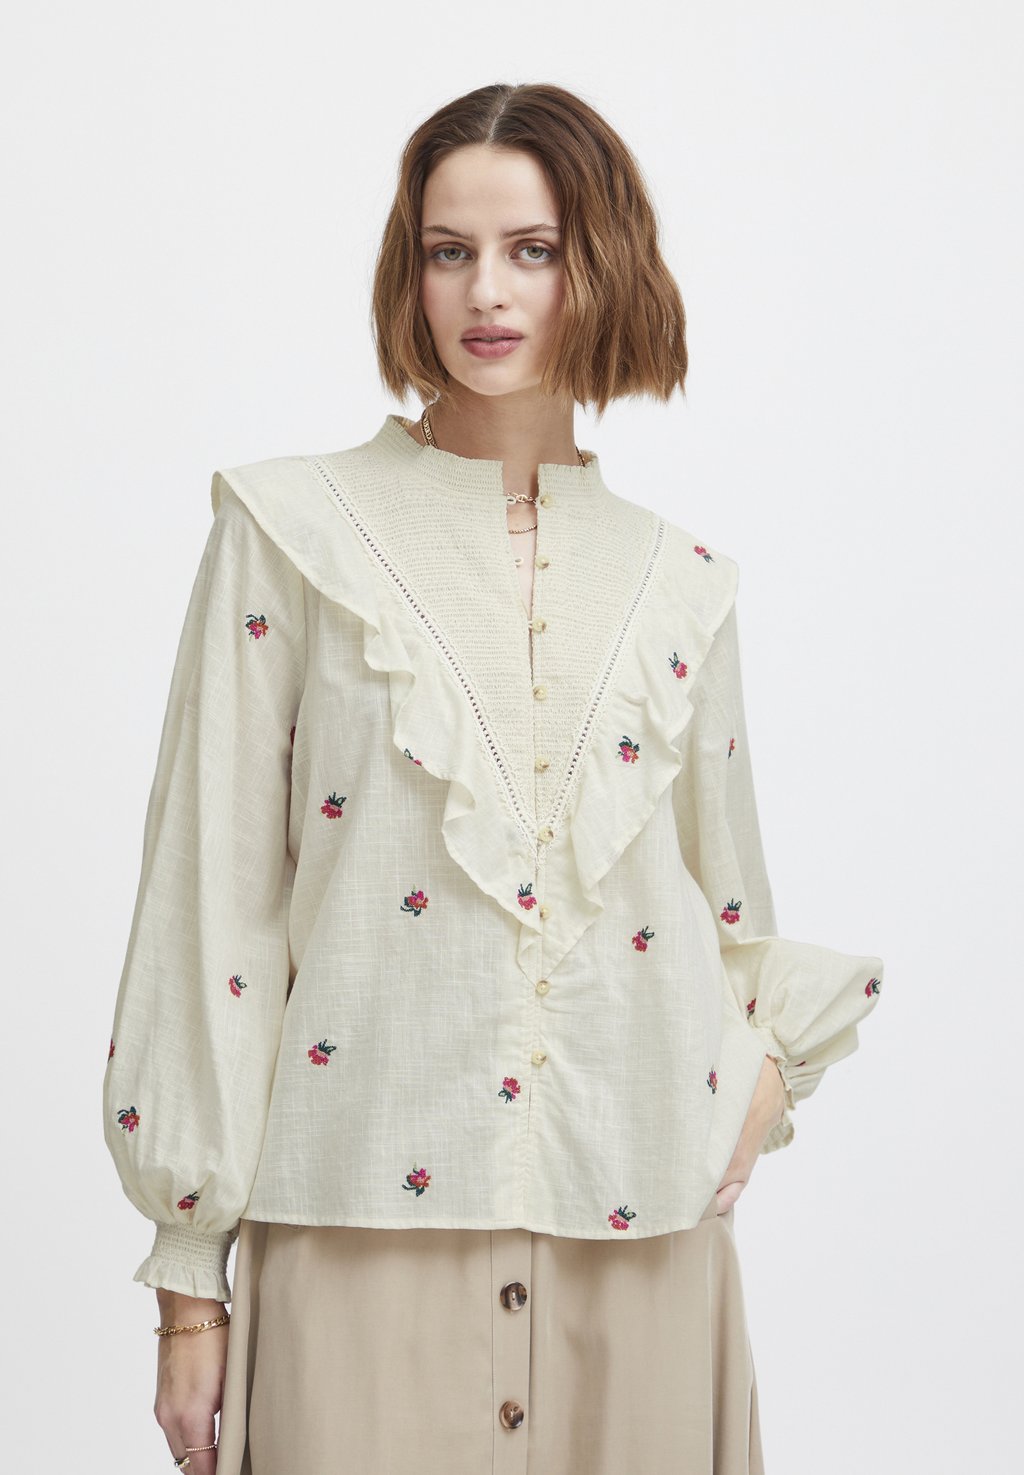 Рубашка Atelier Rêve, цветочная вышивка так milk silk screen flower embroidery lace accessories diy skirt clothes curtain width 22 cm